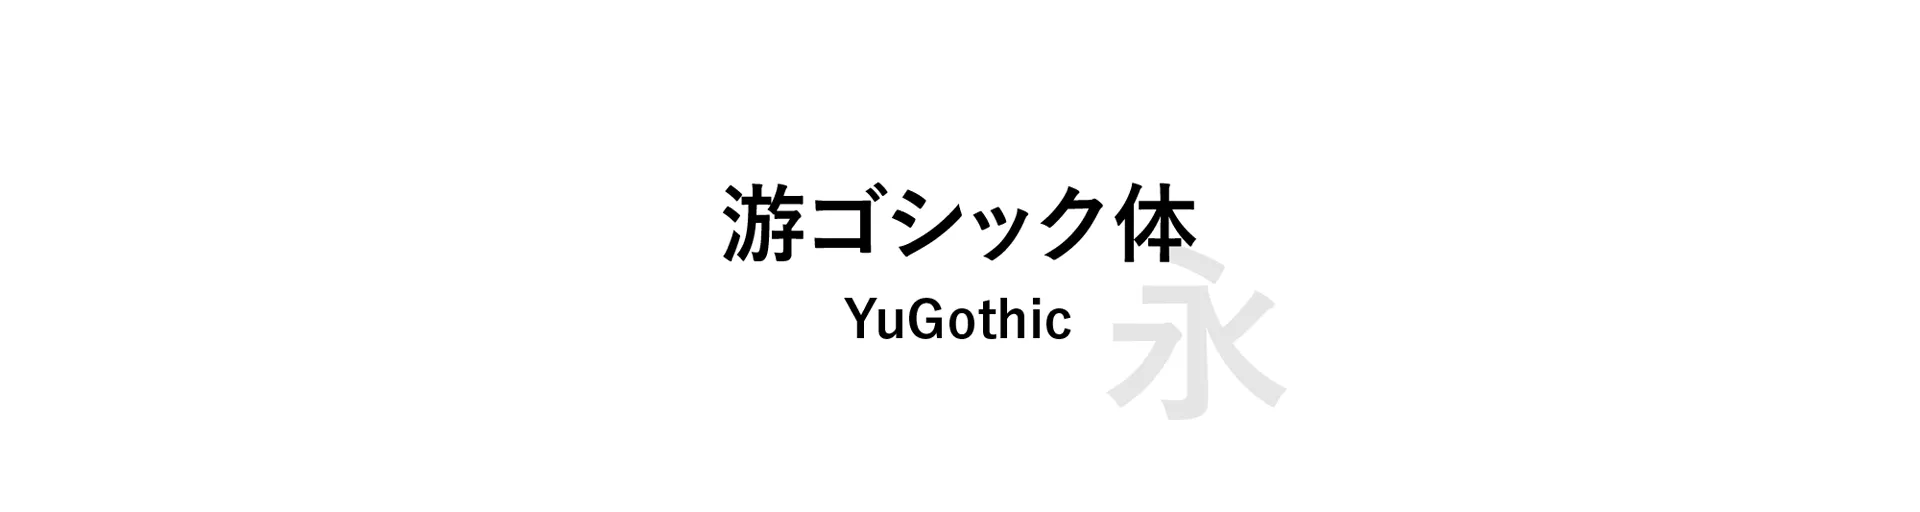 YuGothic